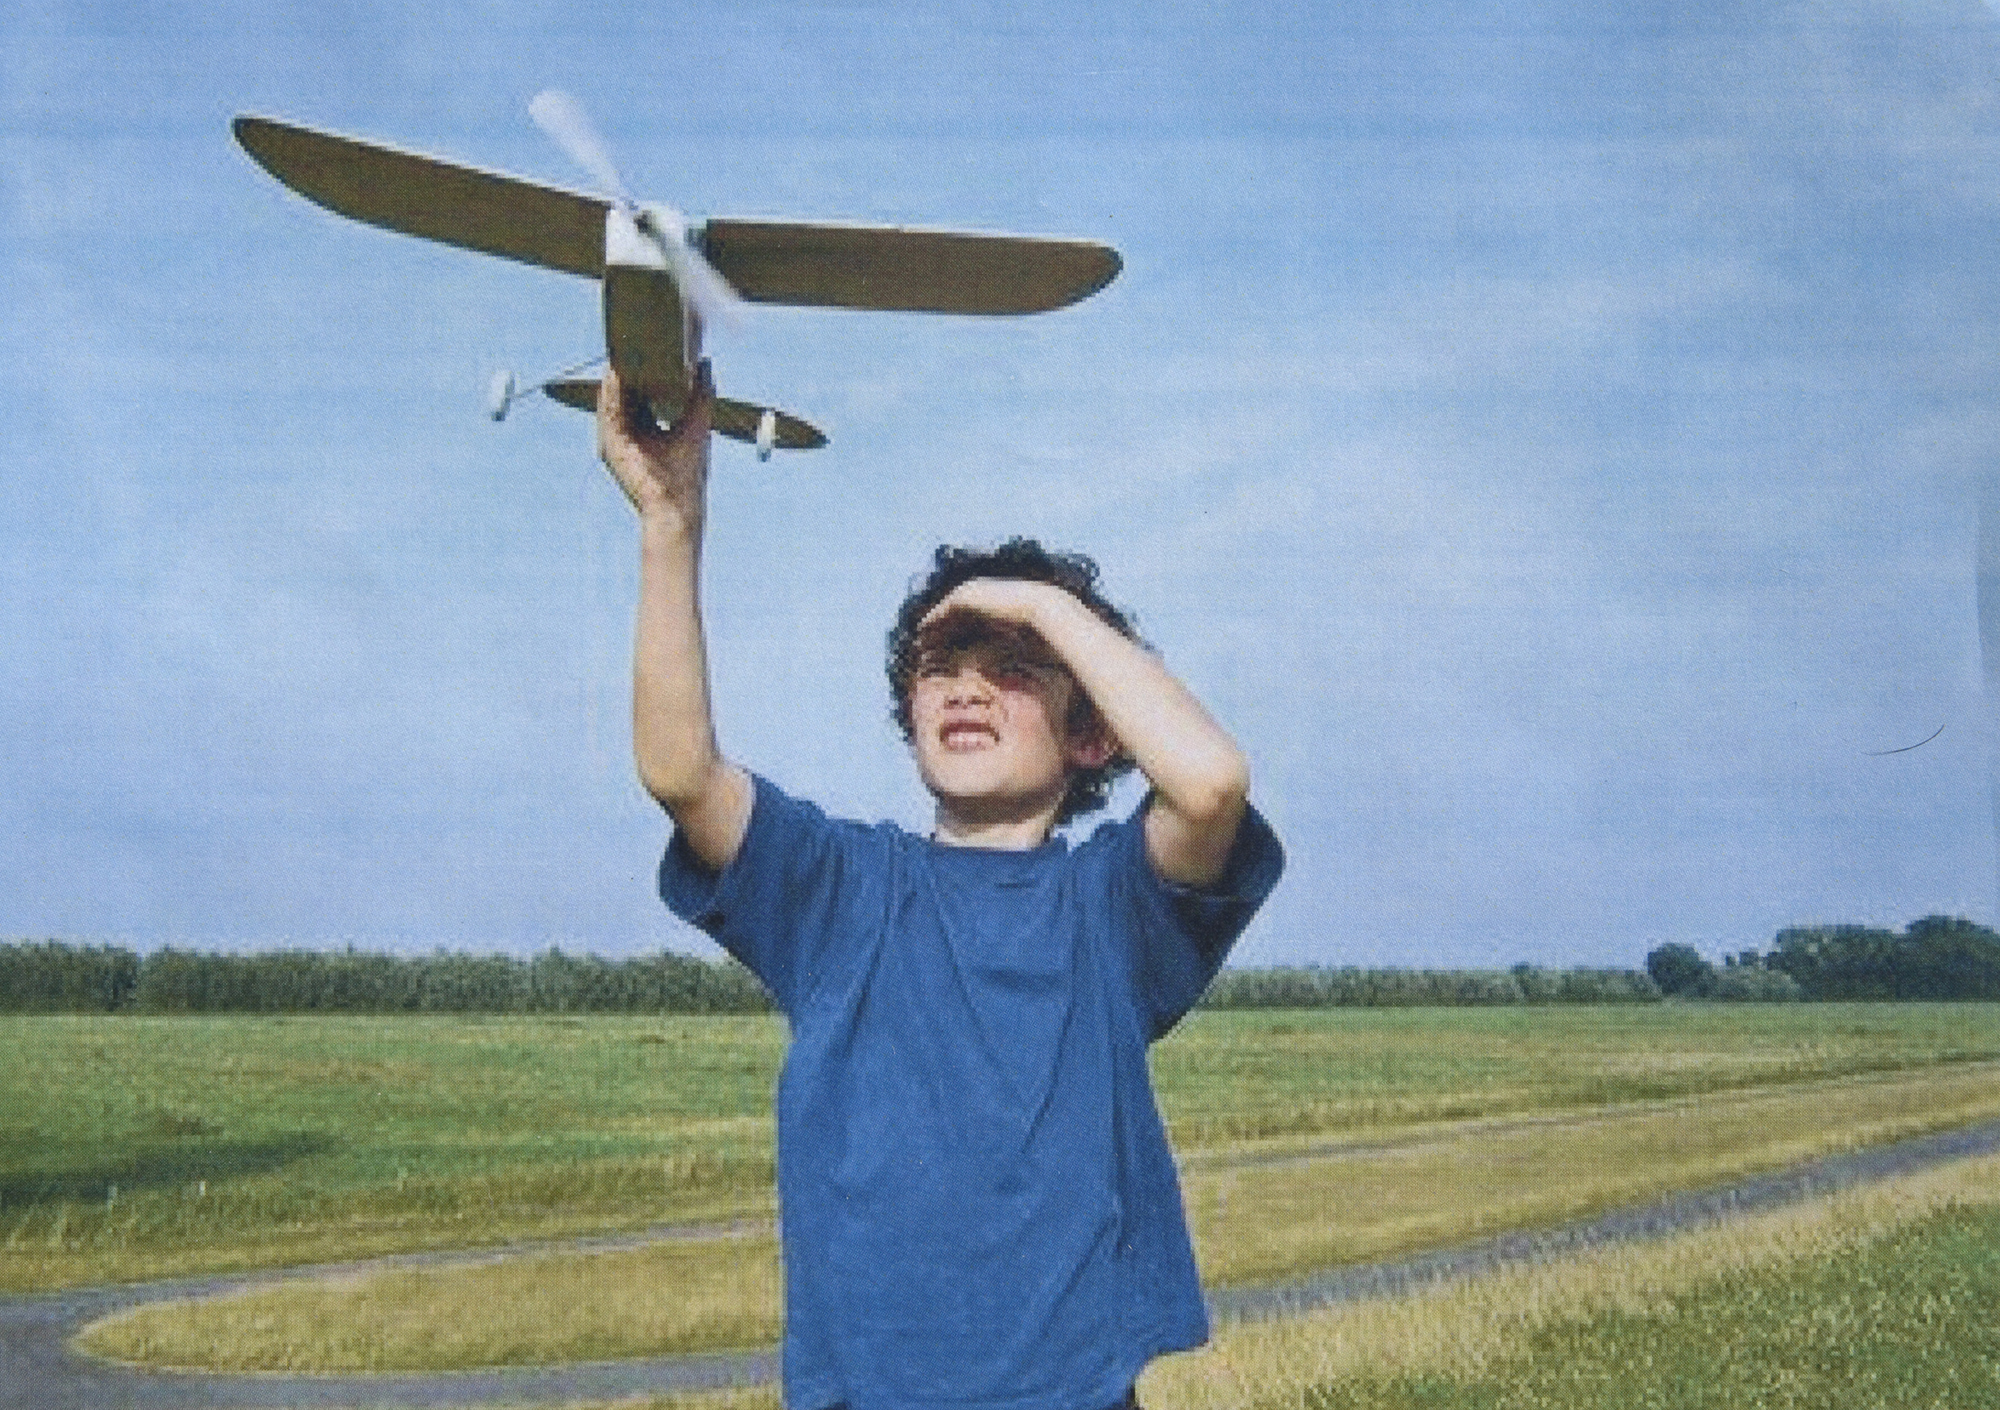 boy throwing model plane